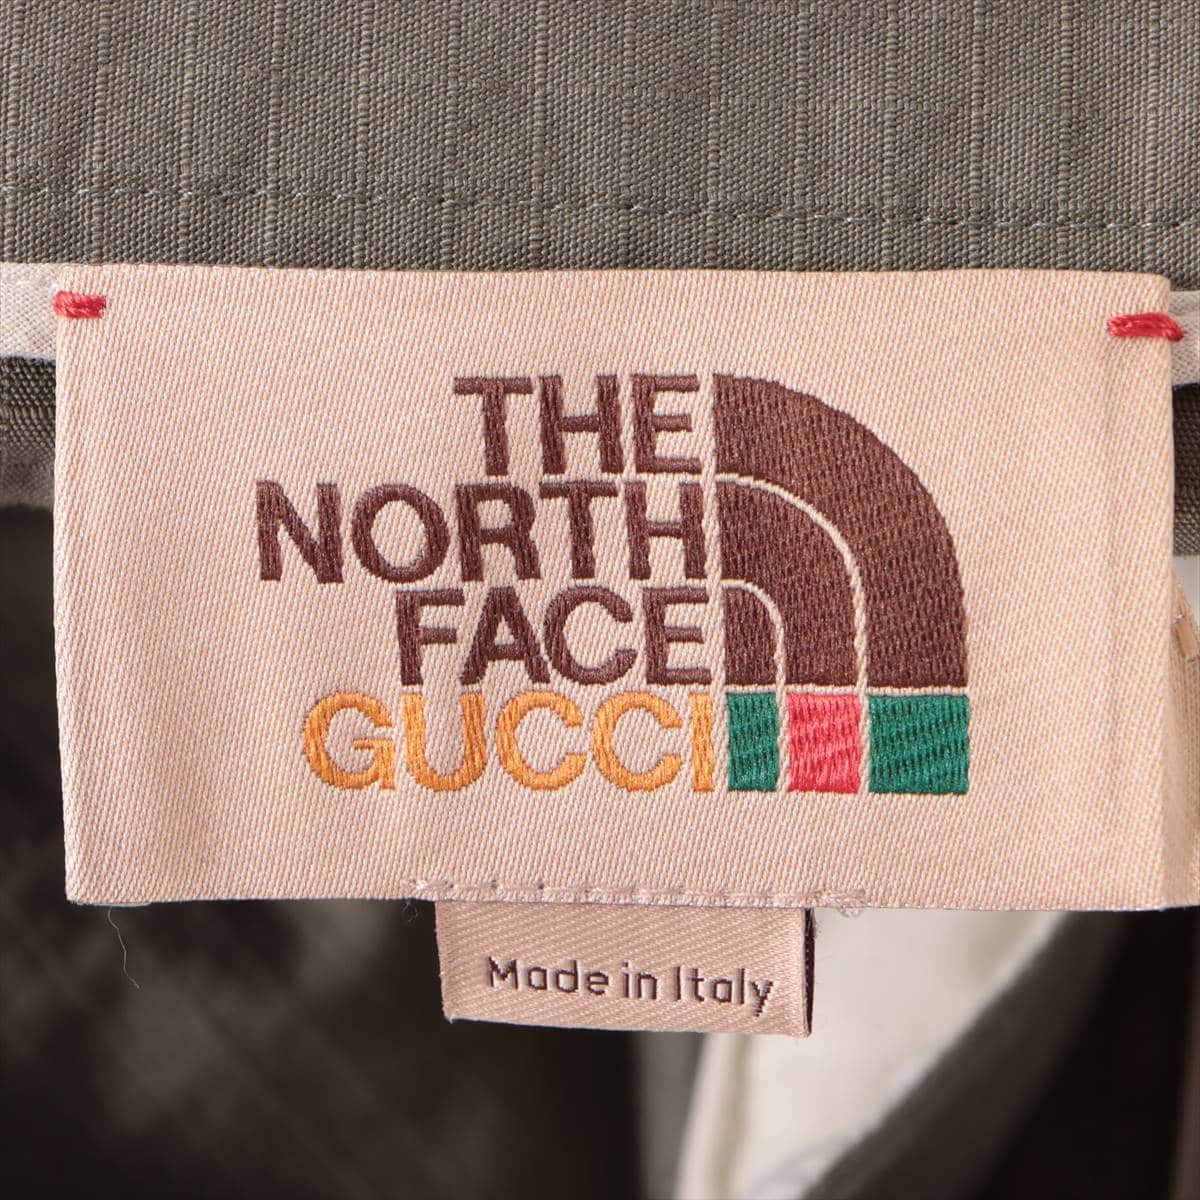 Gucci x North Face Cotton & nylon Short pants 46 Men's Khaki  643129 Cargo pants